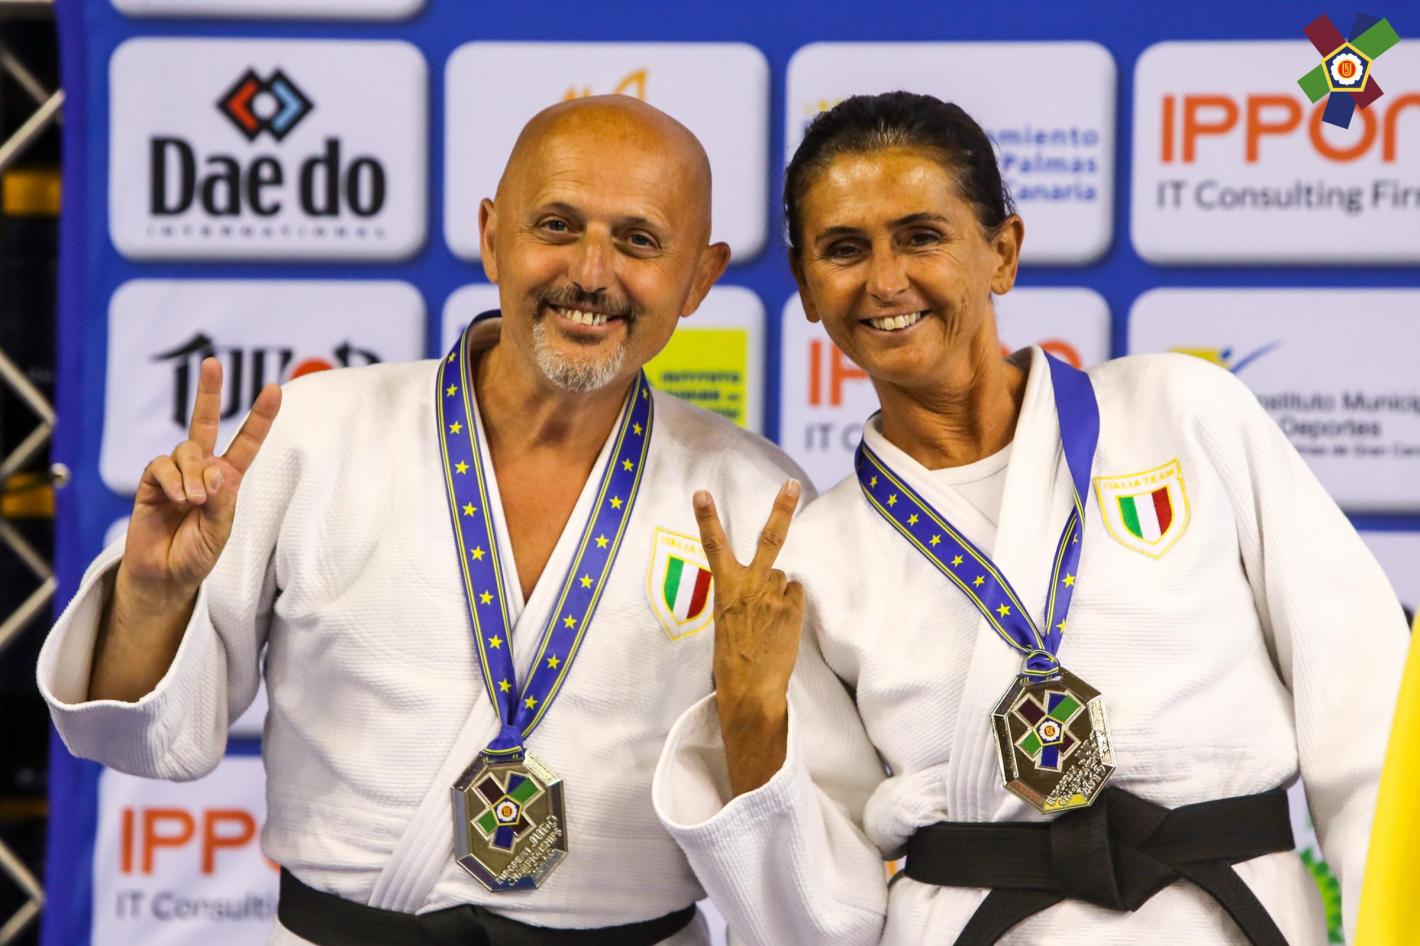 images/friuli_venezia_giulia/2019/medium/EJU-Kata-European-Judo-Championships-Las_Palmas_de_Gran_Canaria-2019-07-20-Gabriel-Juan-371760.jpg